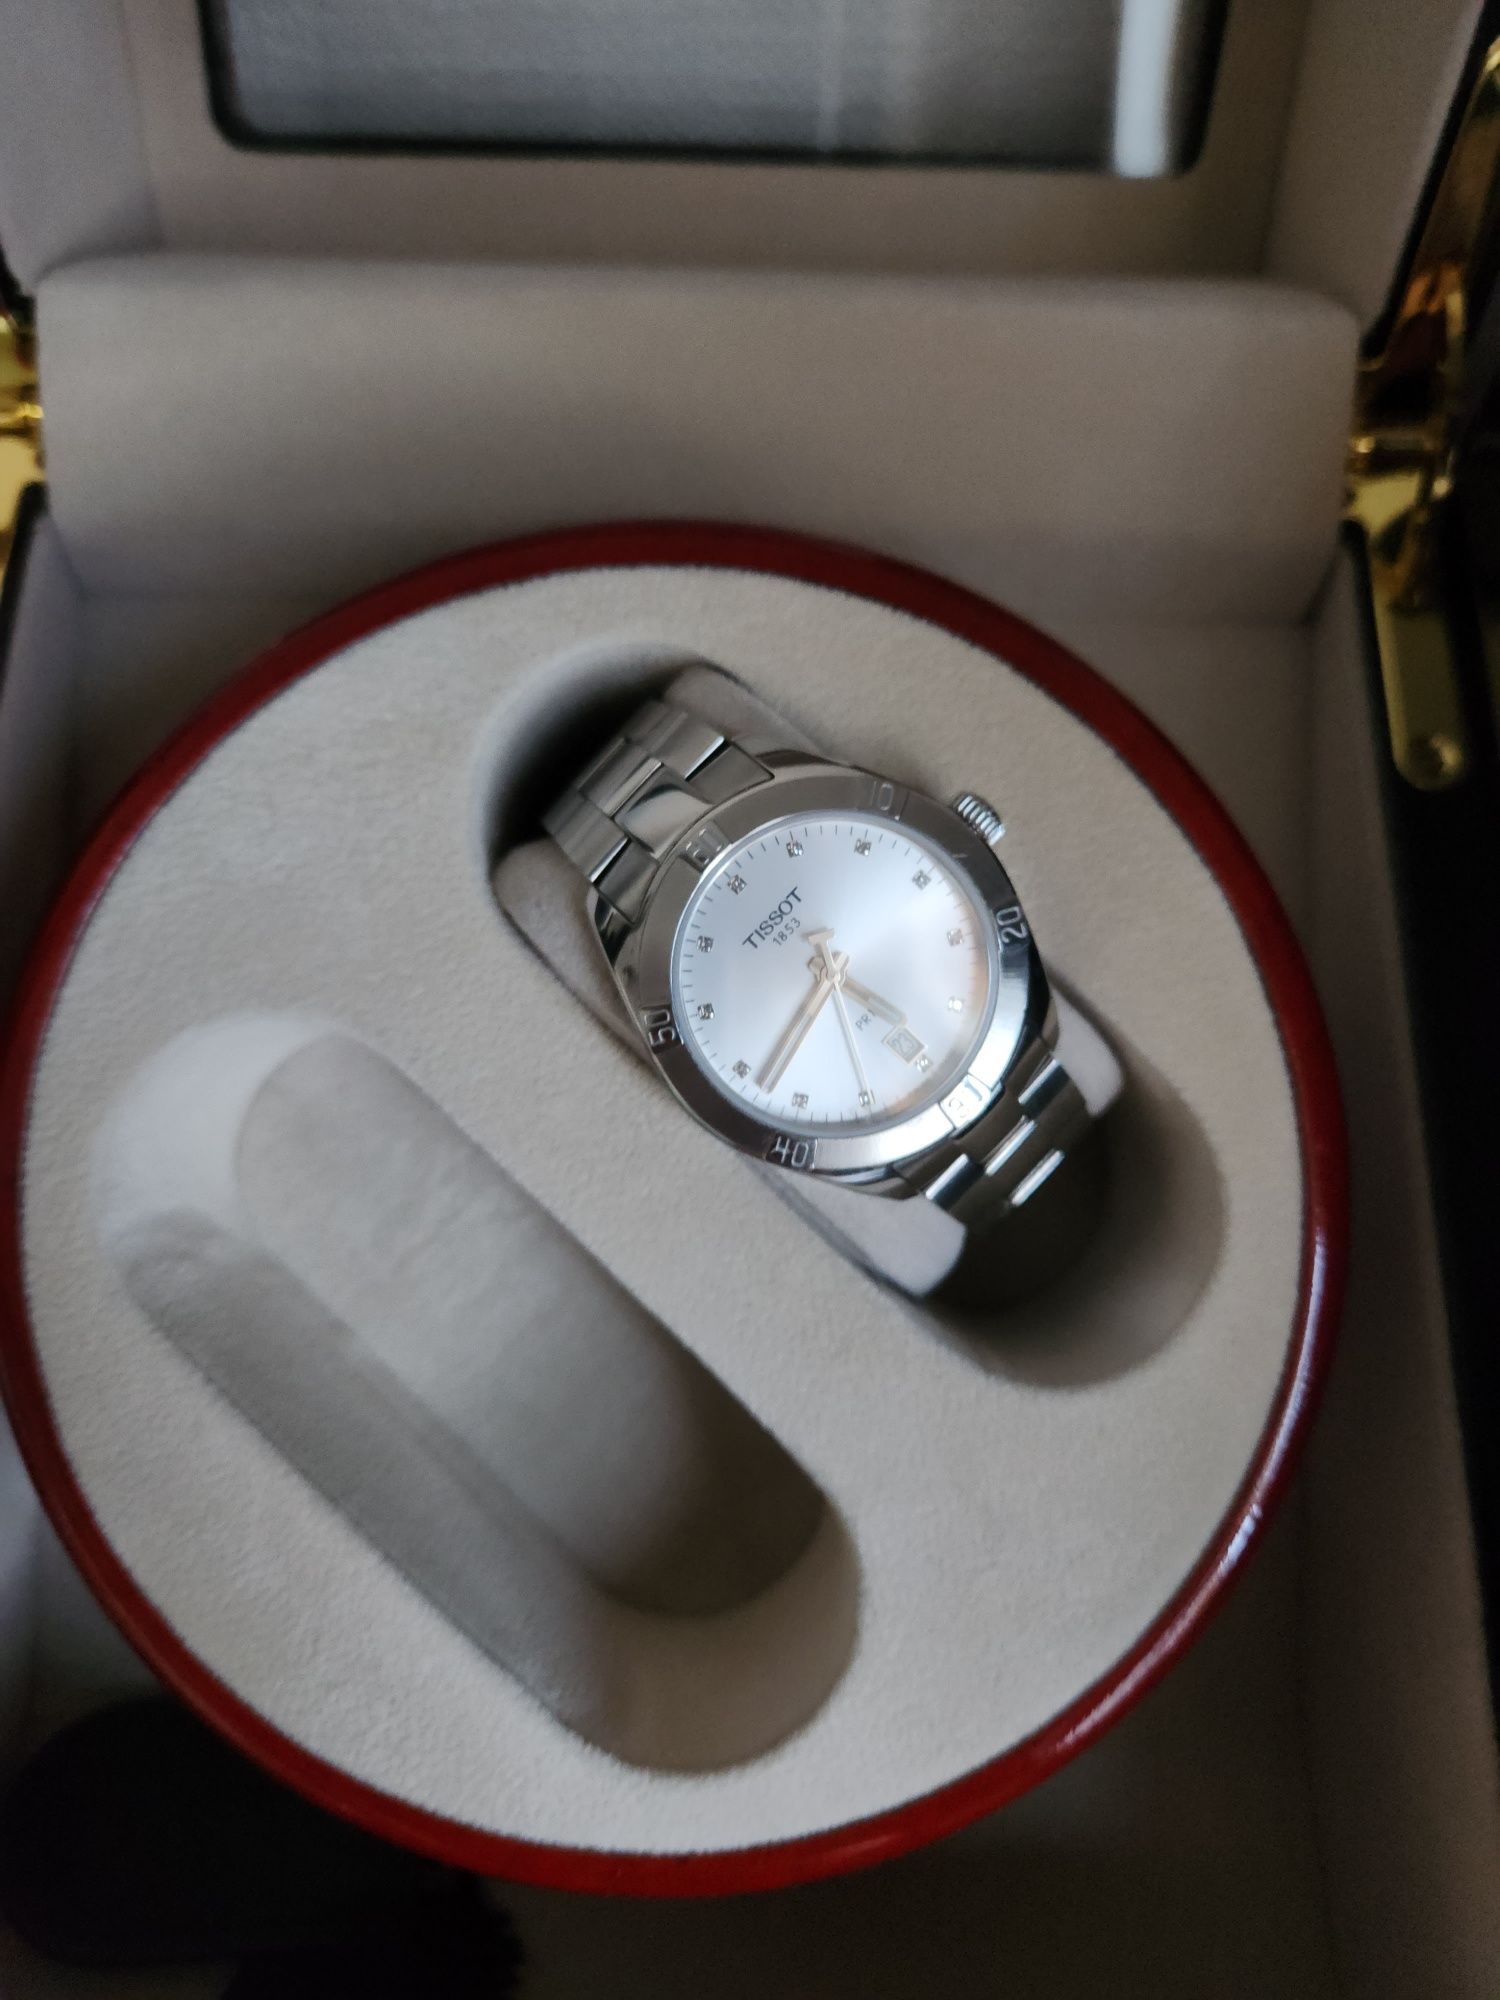 Швейцарские часы Tissot с бриллиантами